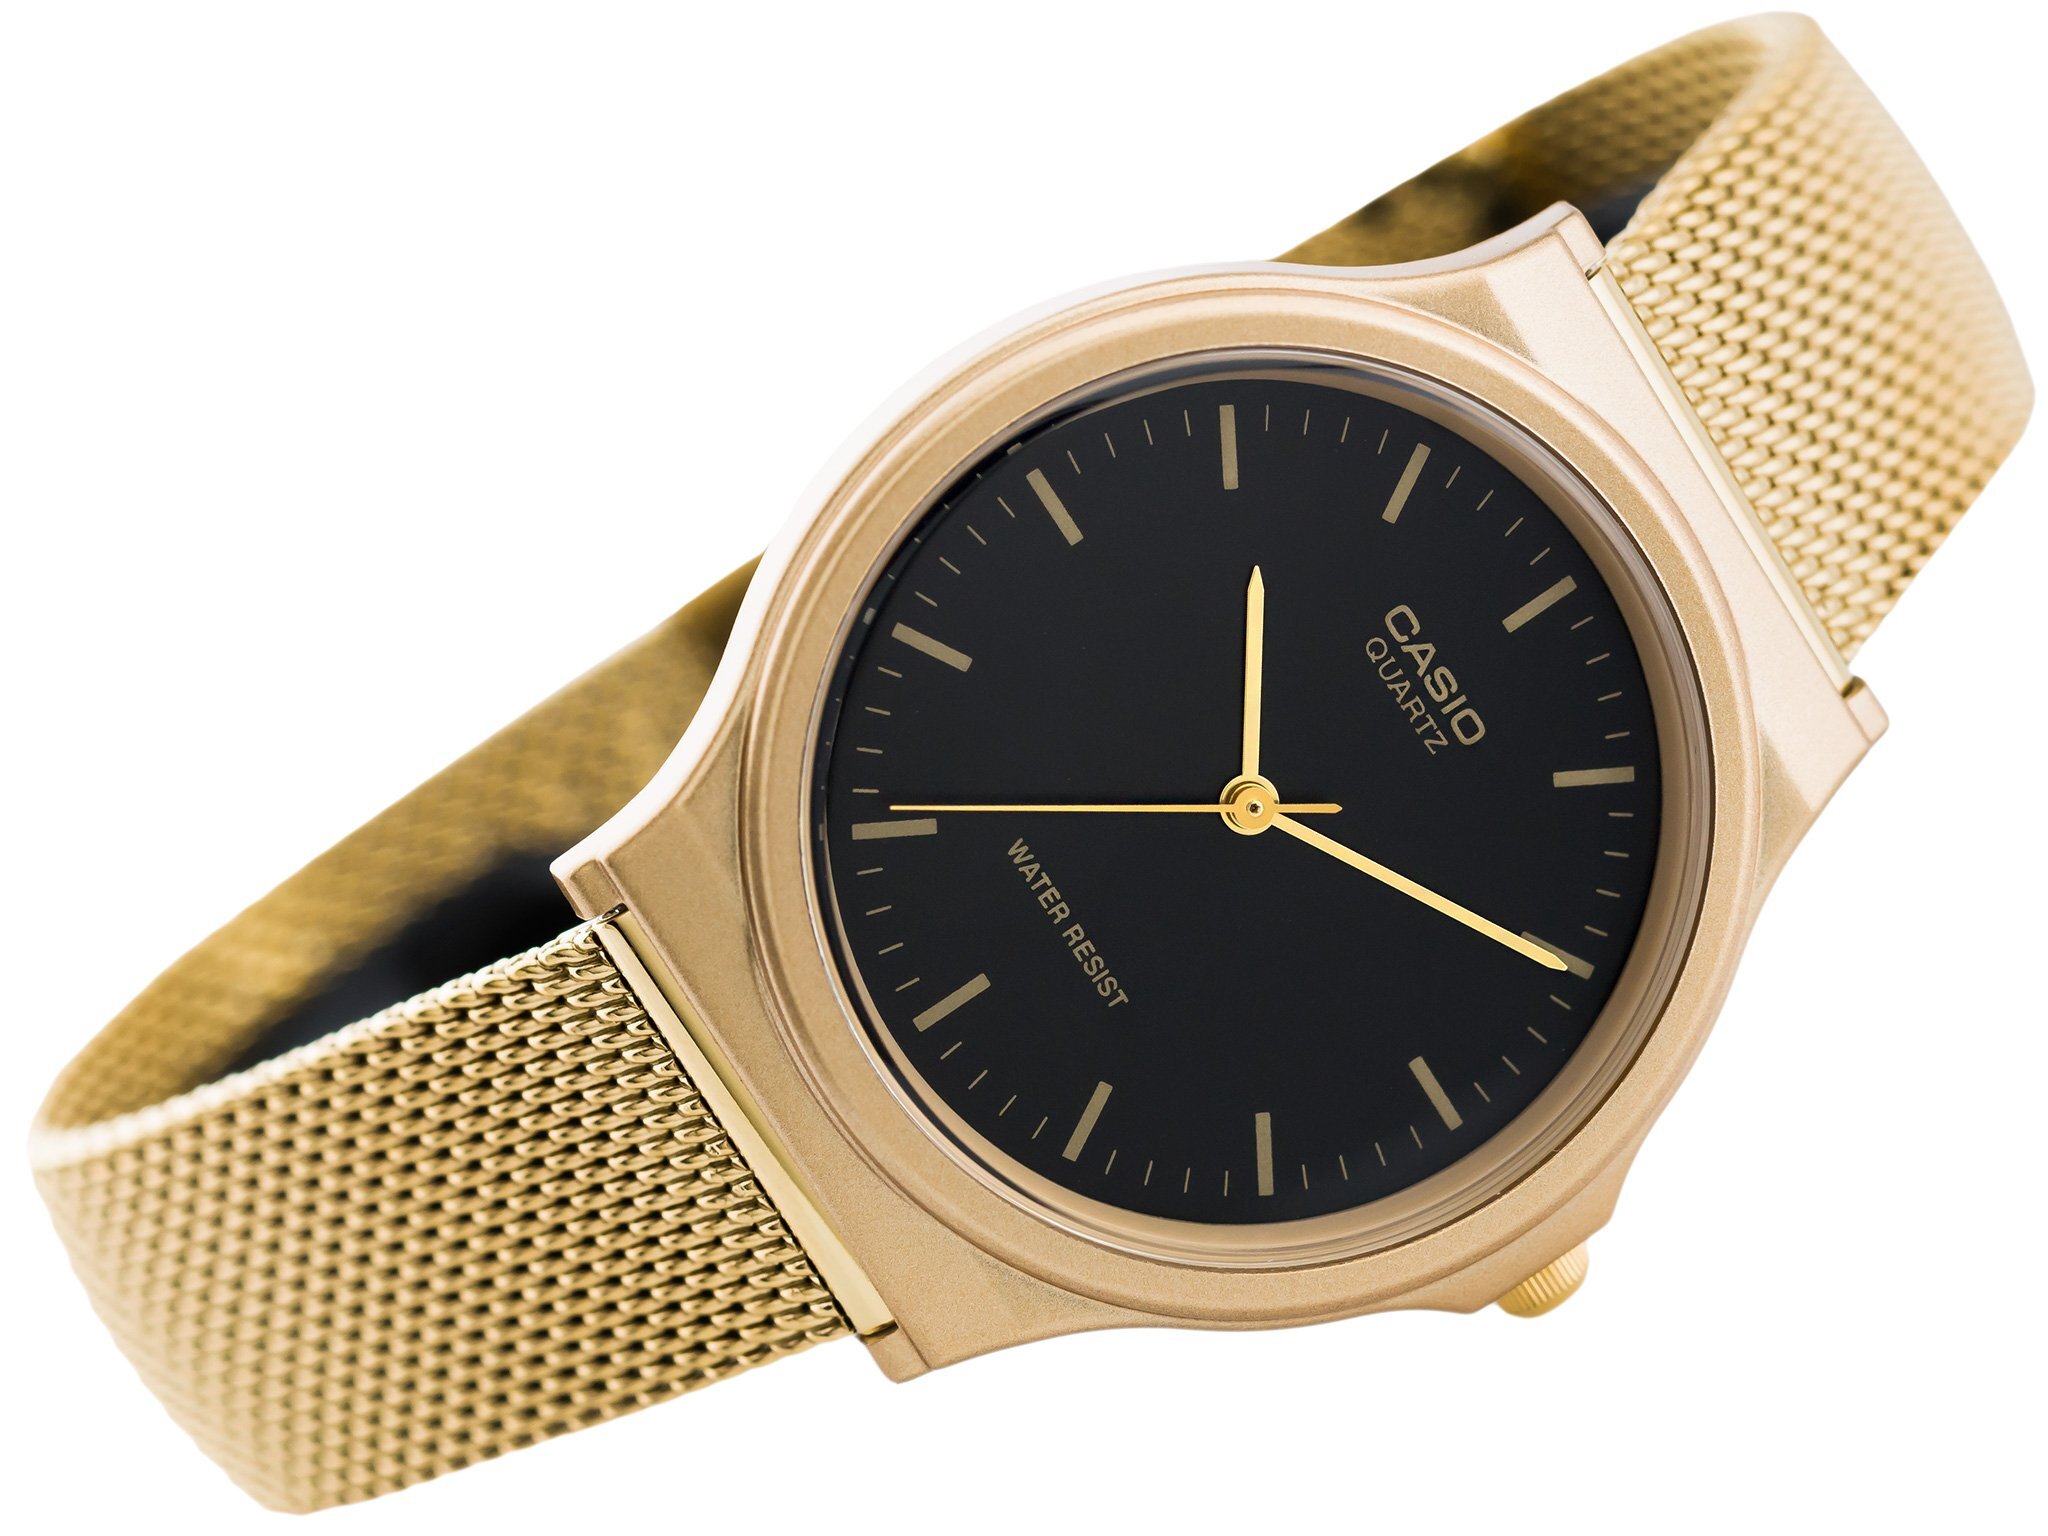 Reloj Casio Mujer MQ-24MG-1EEF Dorado Esterilla — Joyeriacanovas